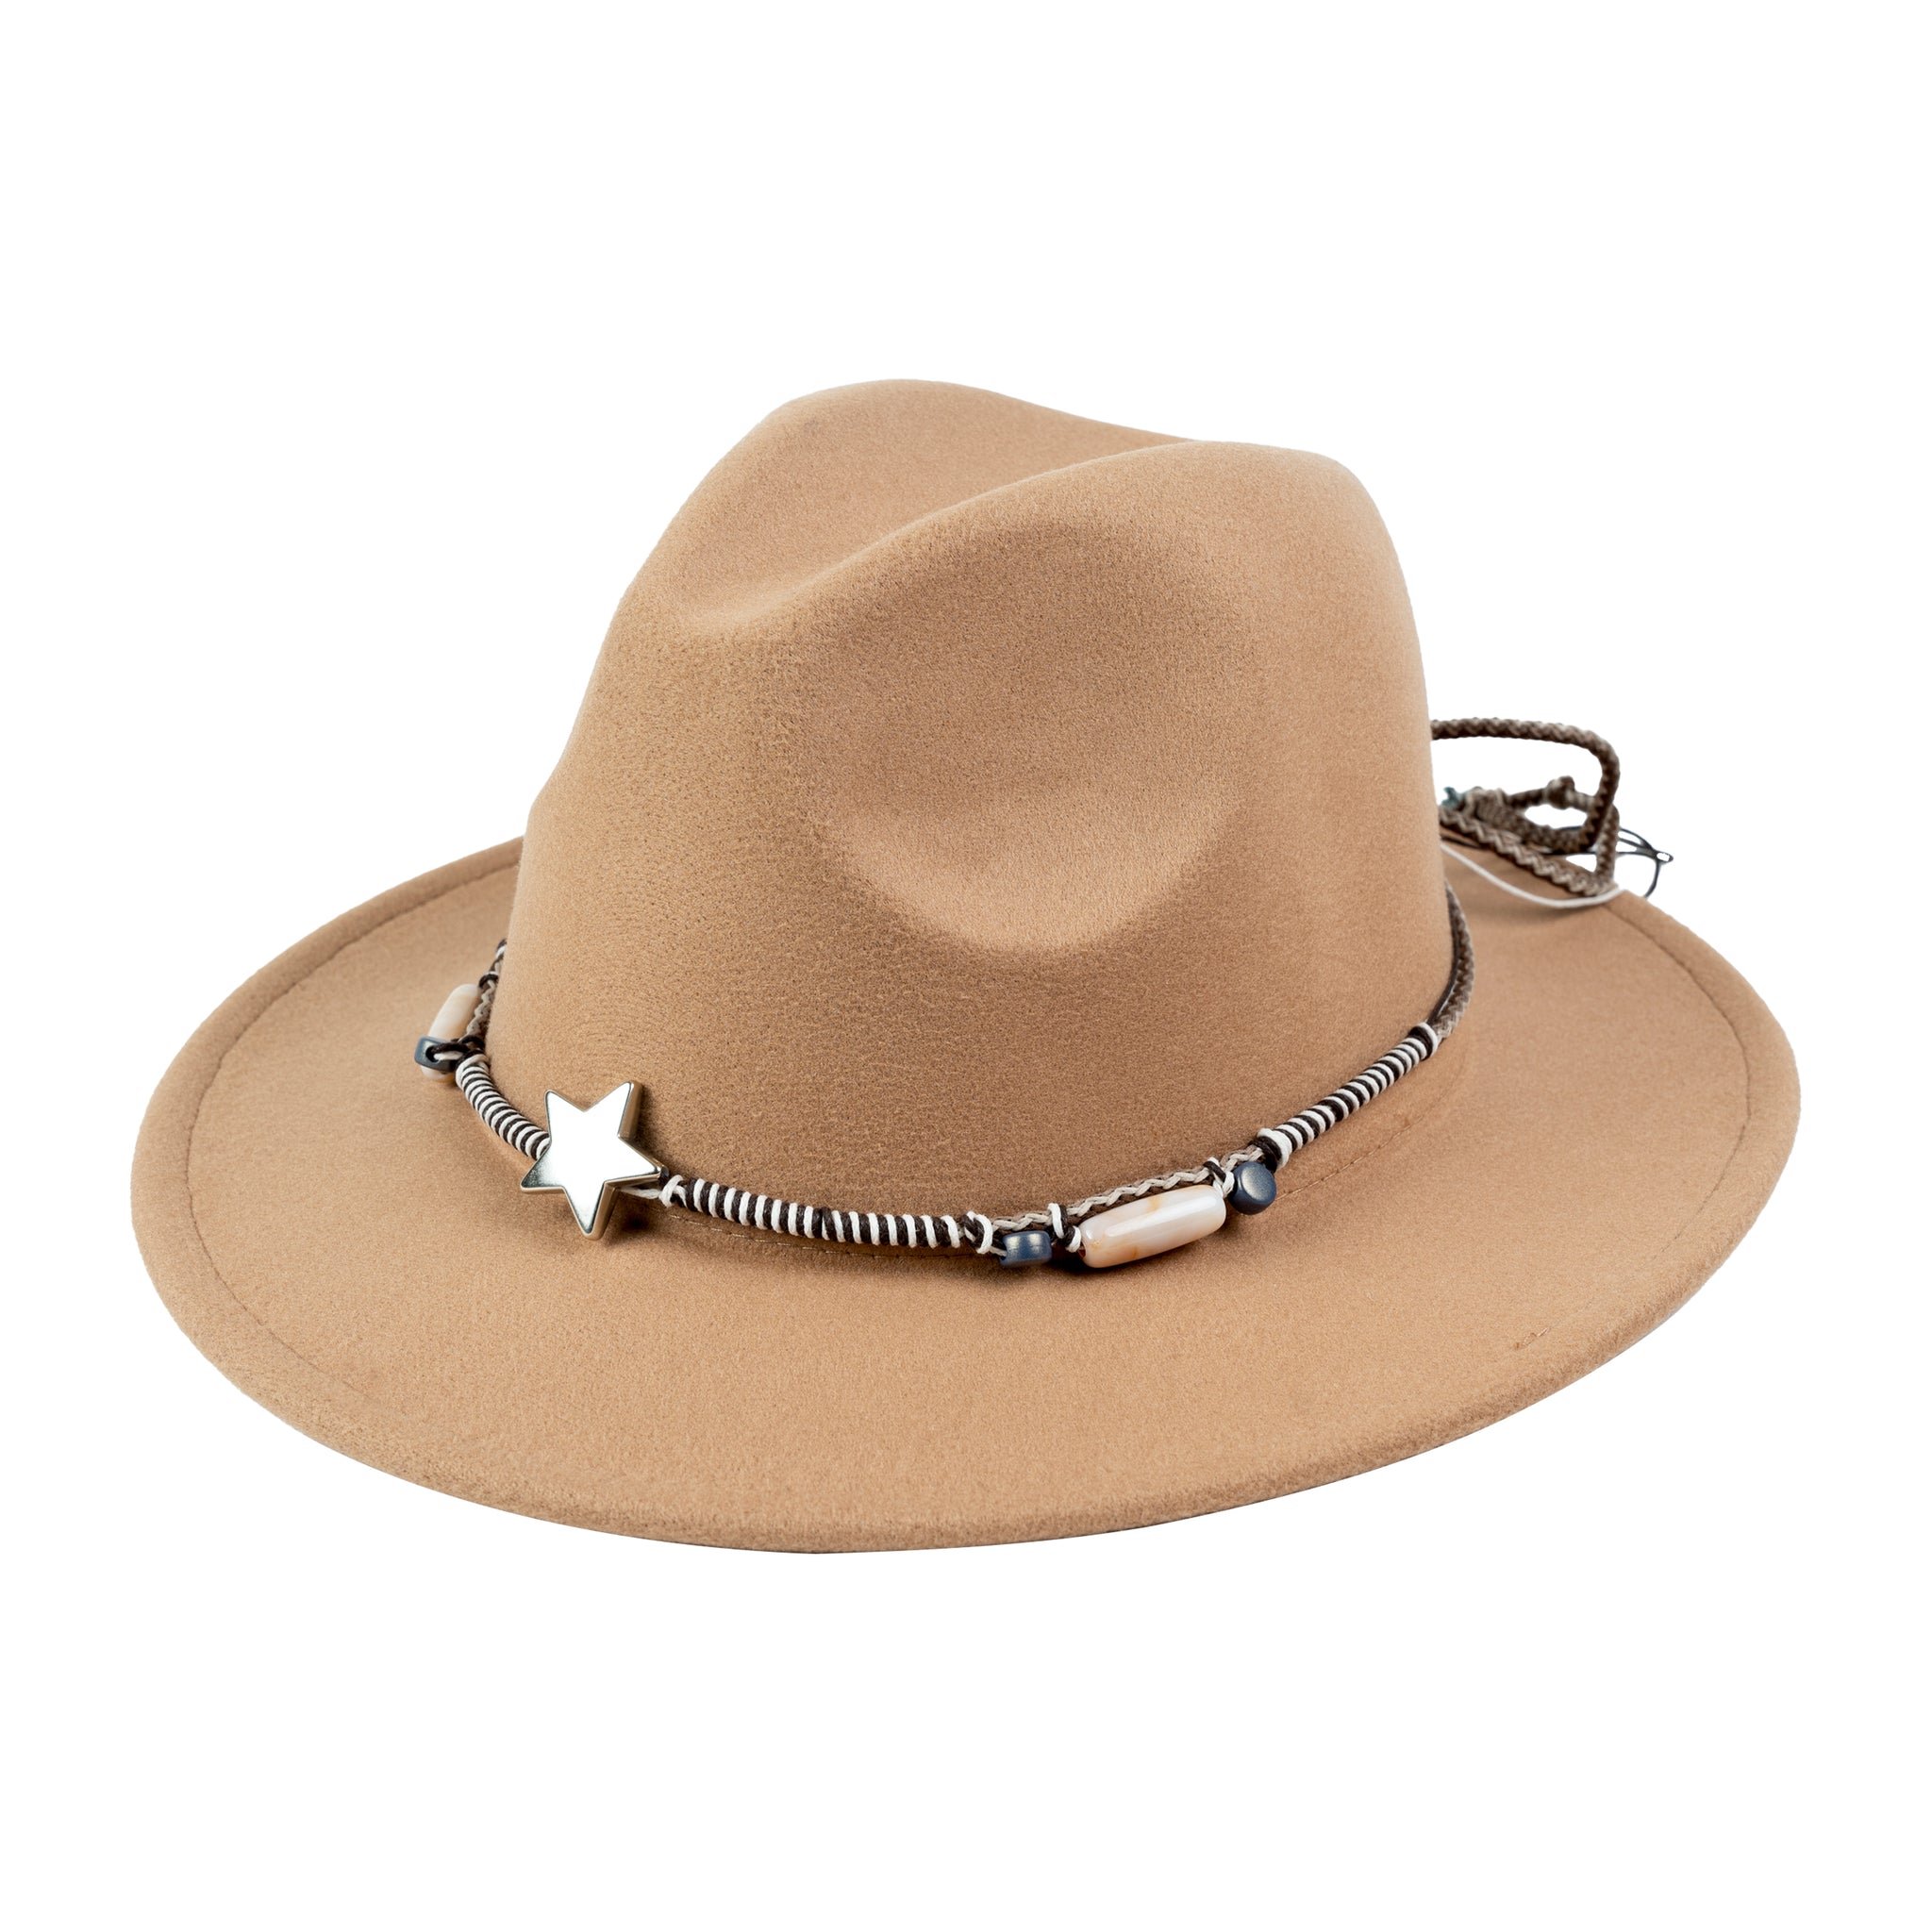 Chokore Starry Fedora Hat (Khaki)